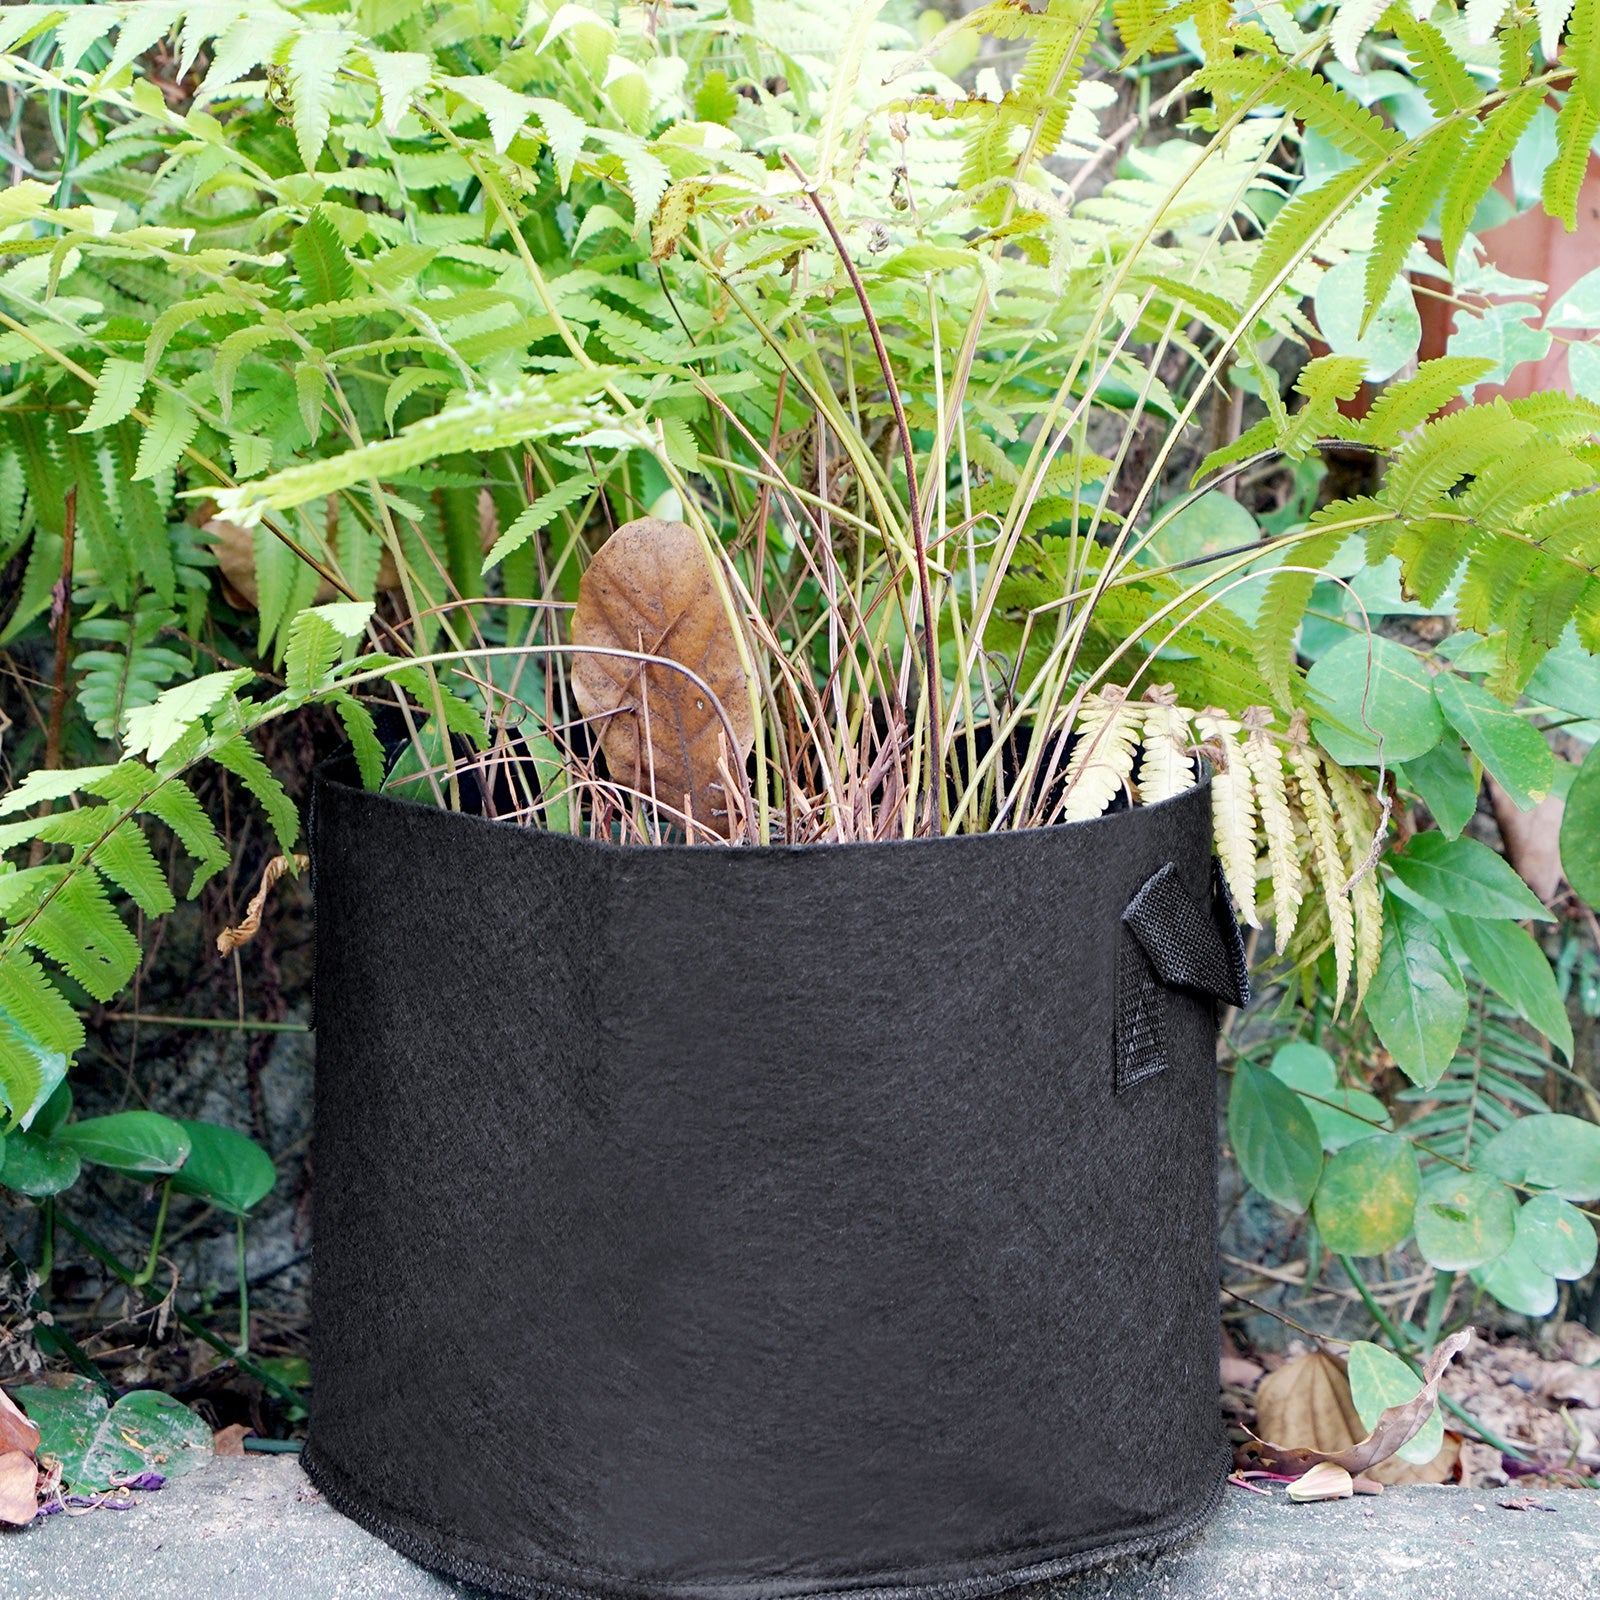 Vegetable Grow Bags,5 PCS Plant Grow Bags Breathable Garden Growing Bag  Planting Tomato Fabric Pots Garden Planter Container With Strap Handles For  Home,Potato,Carrot Planter Bags-7Gallon 